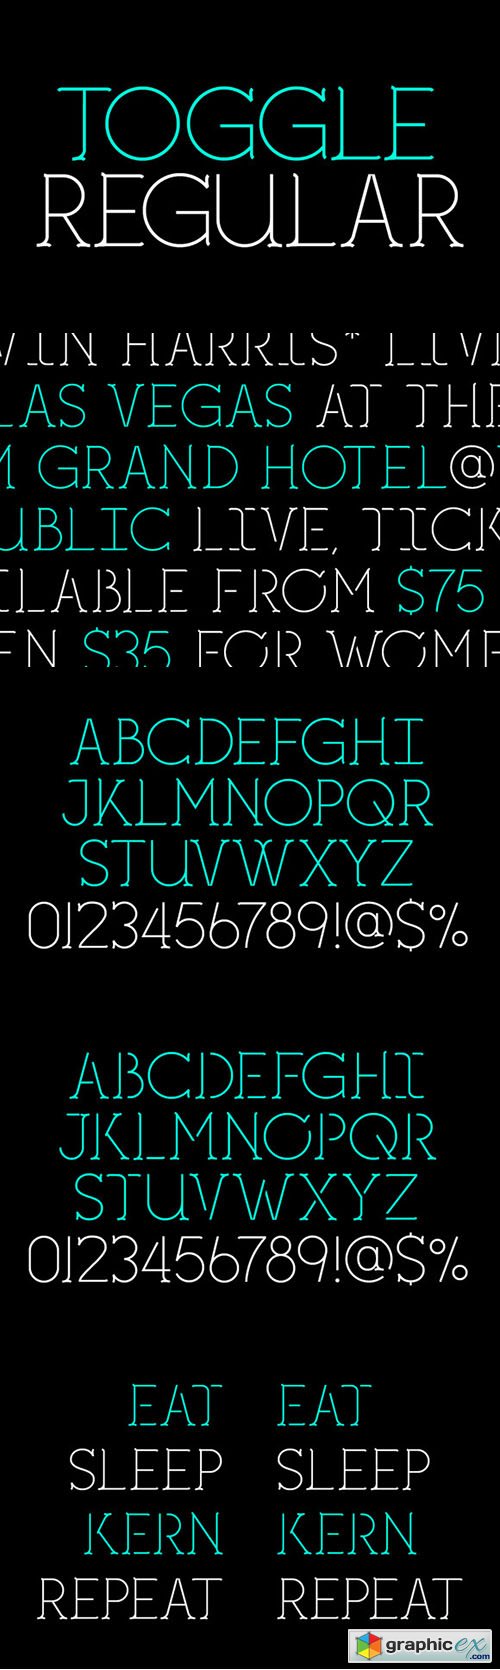  Toggle Typeface